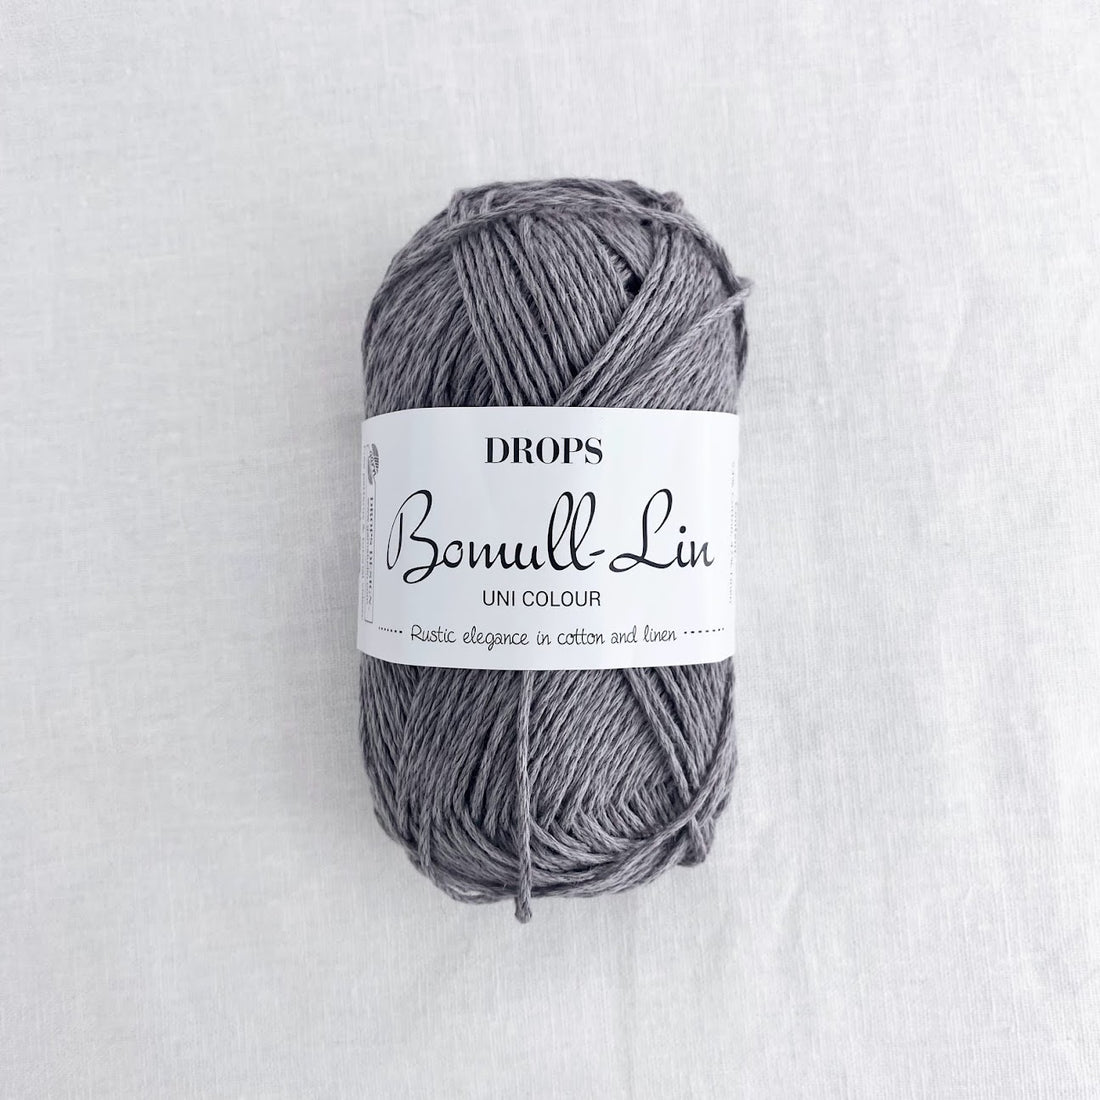 Bomull-Lin | Drops